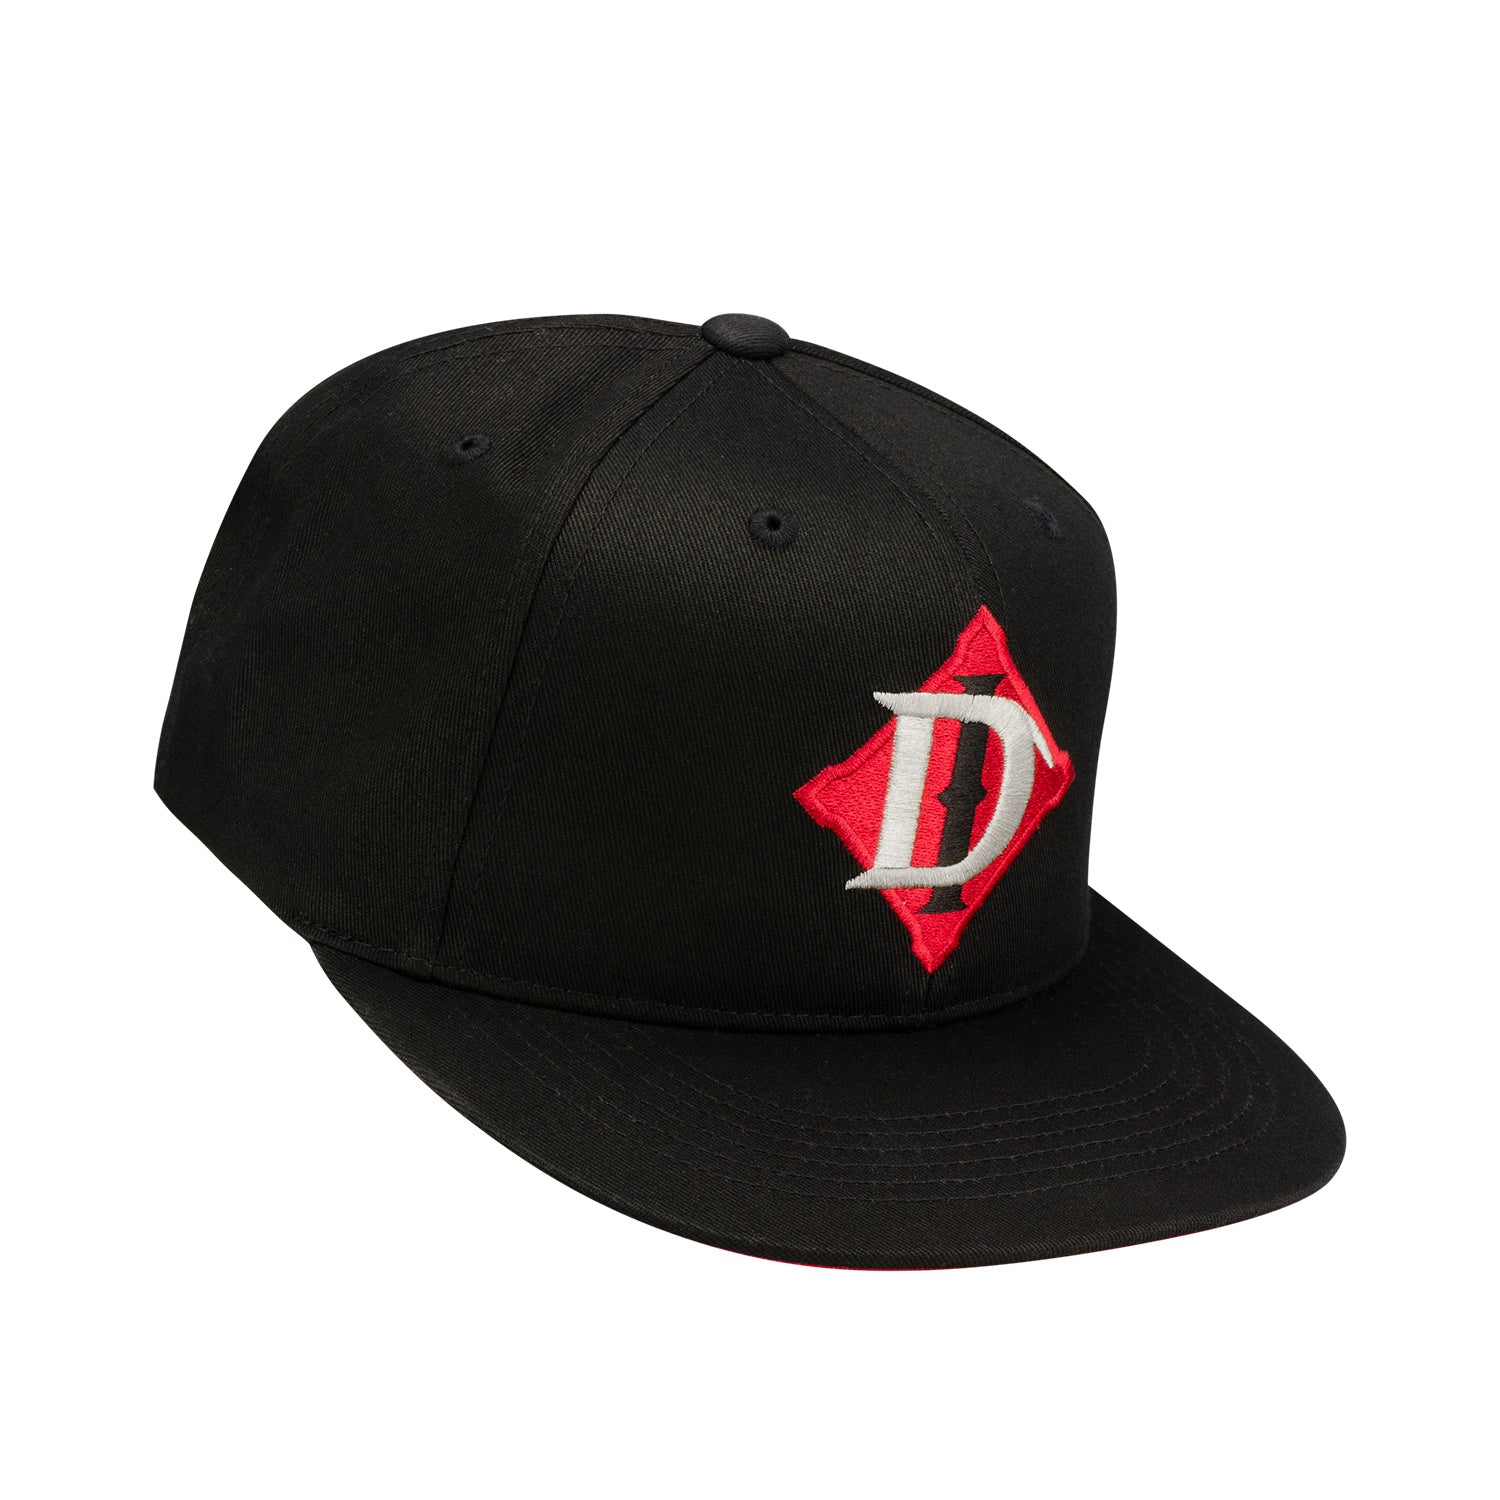 Diablo Immortal Black Flatbill Snapback Hat - Right Side View with Diablo Immortal Logo on Front of Hat